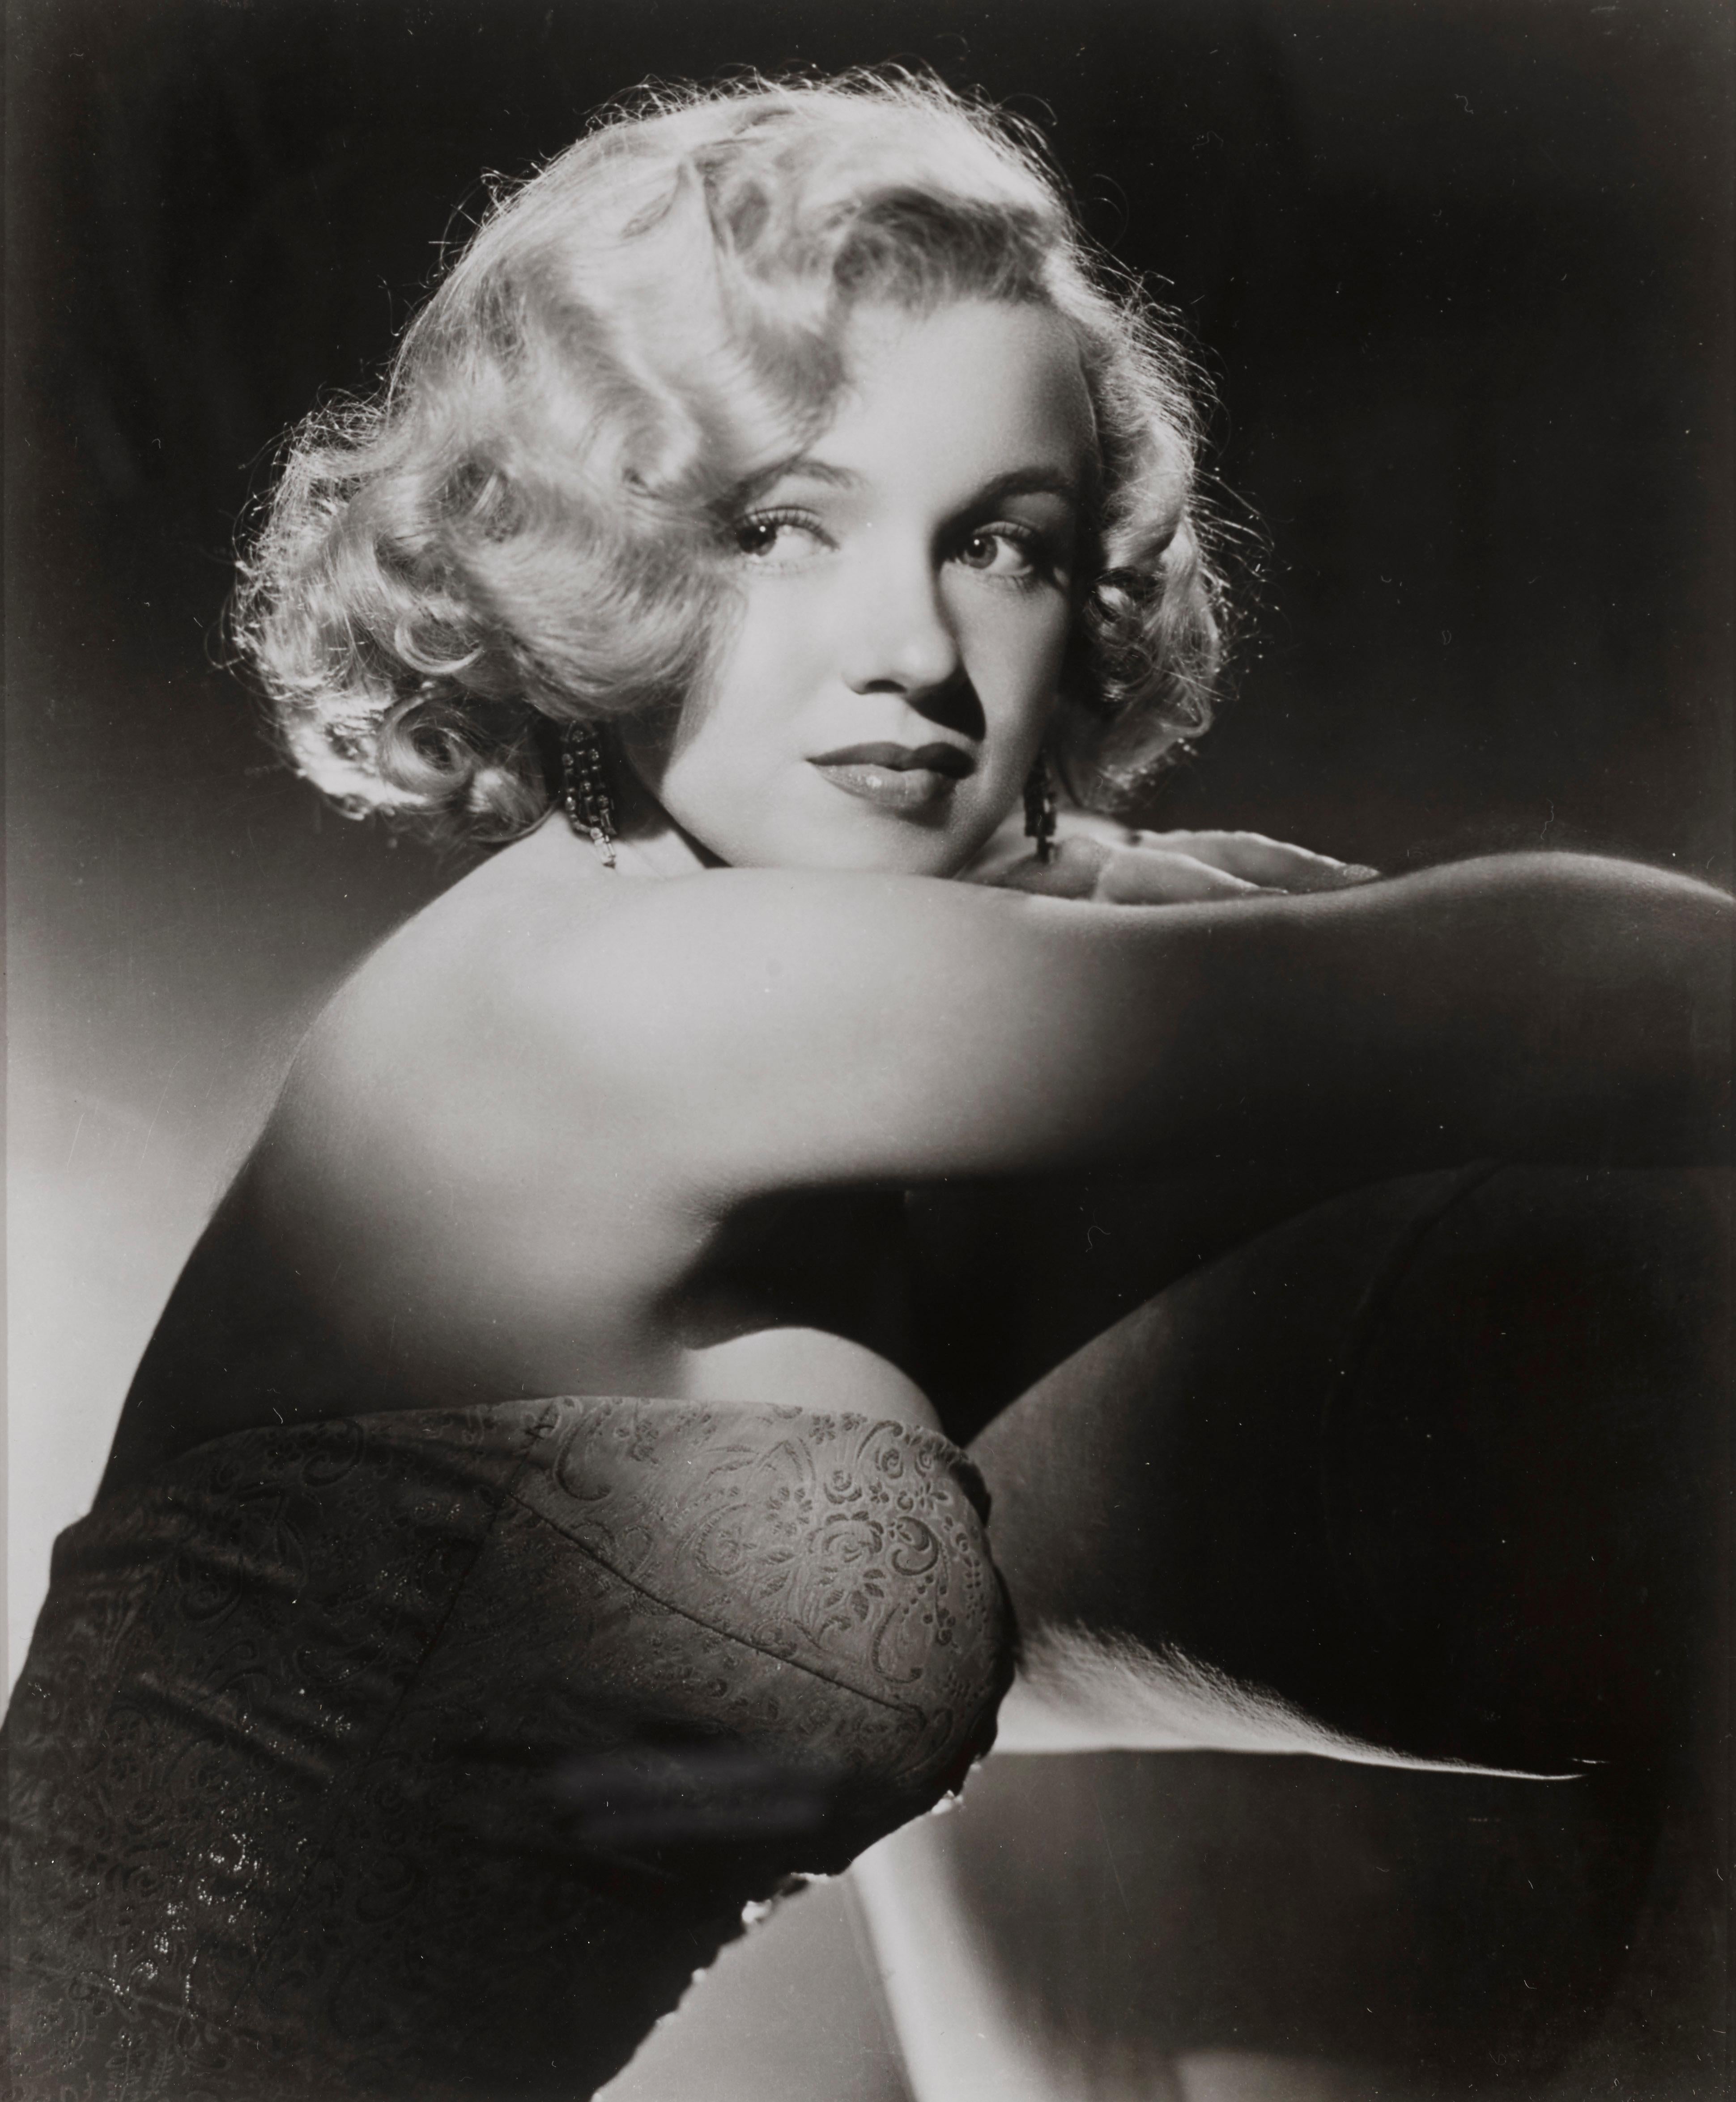 'Marilyn Monroe